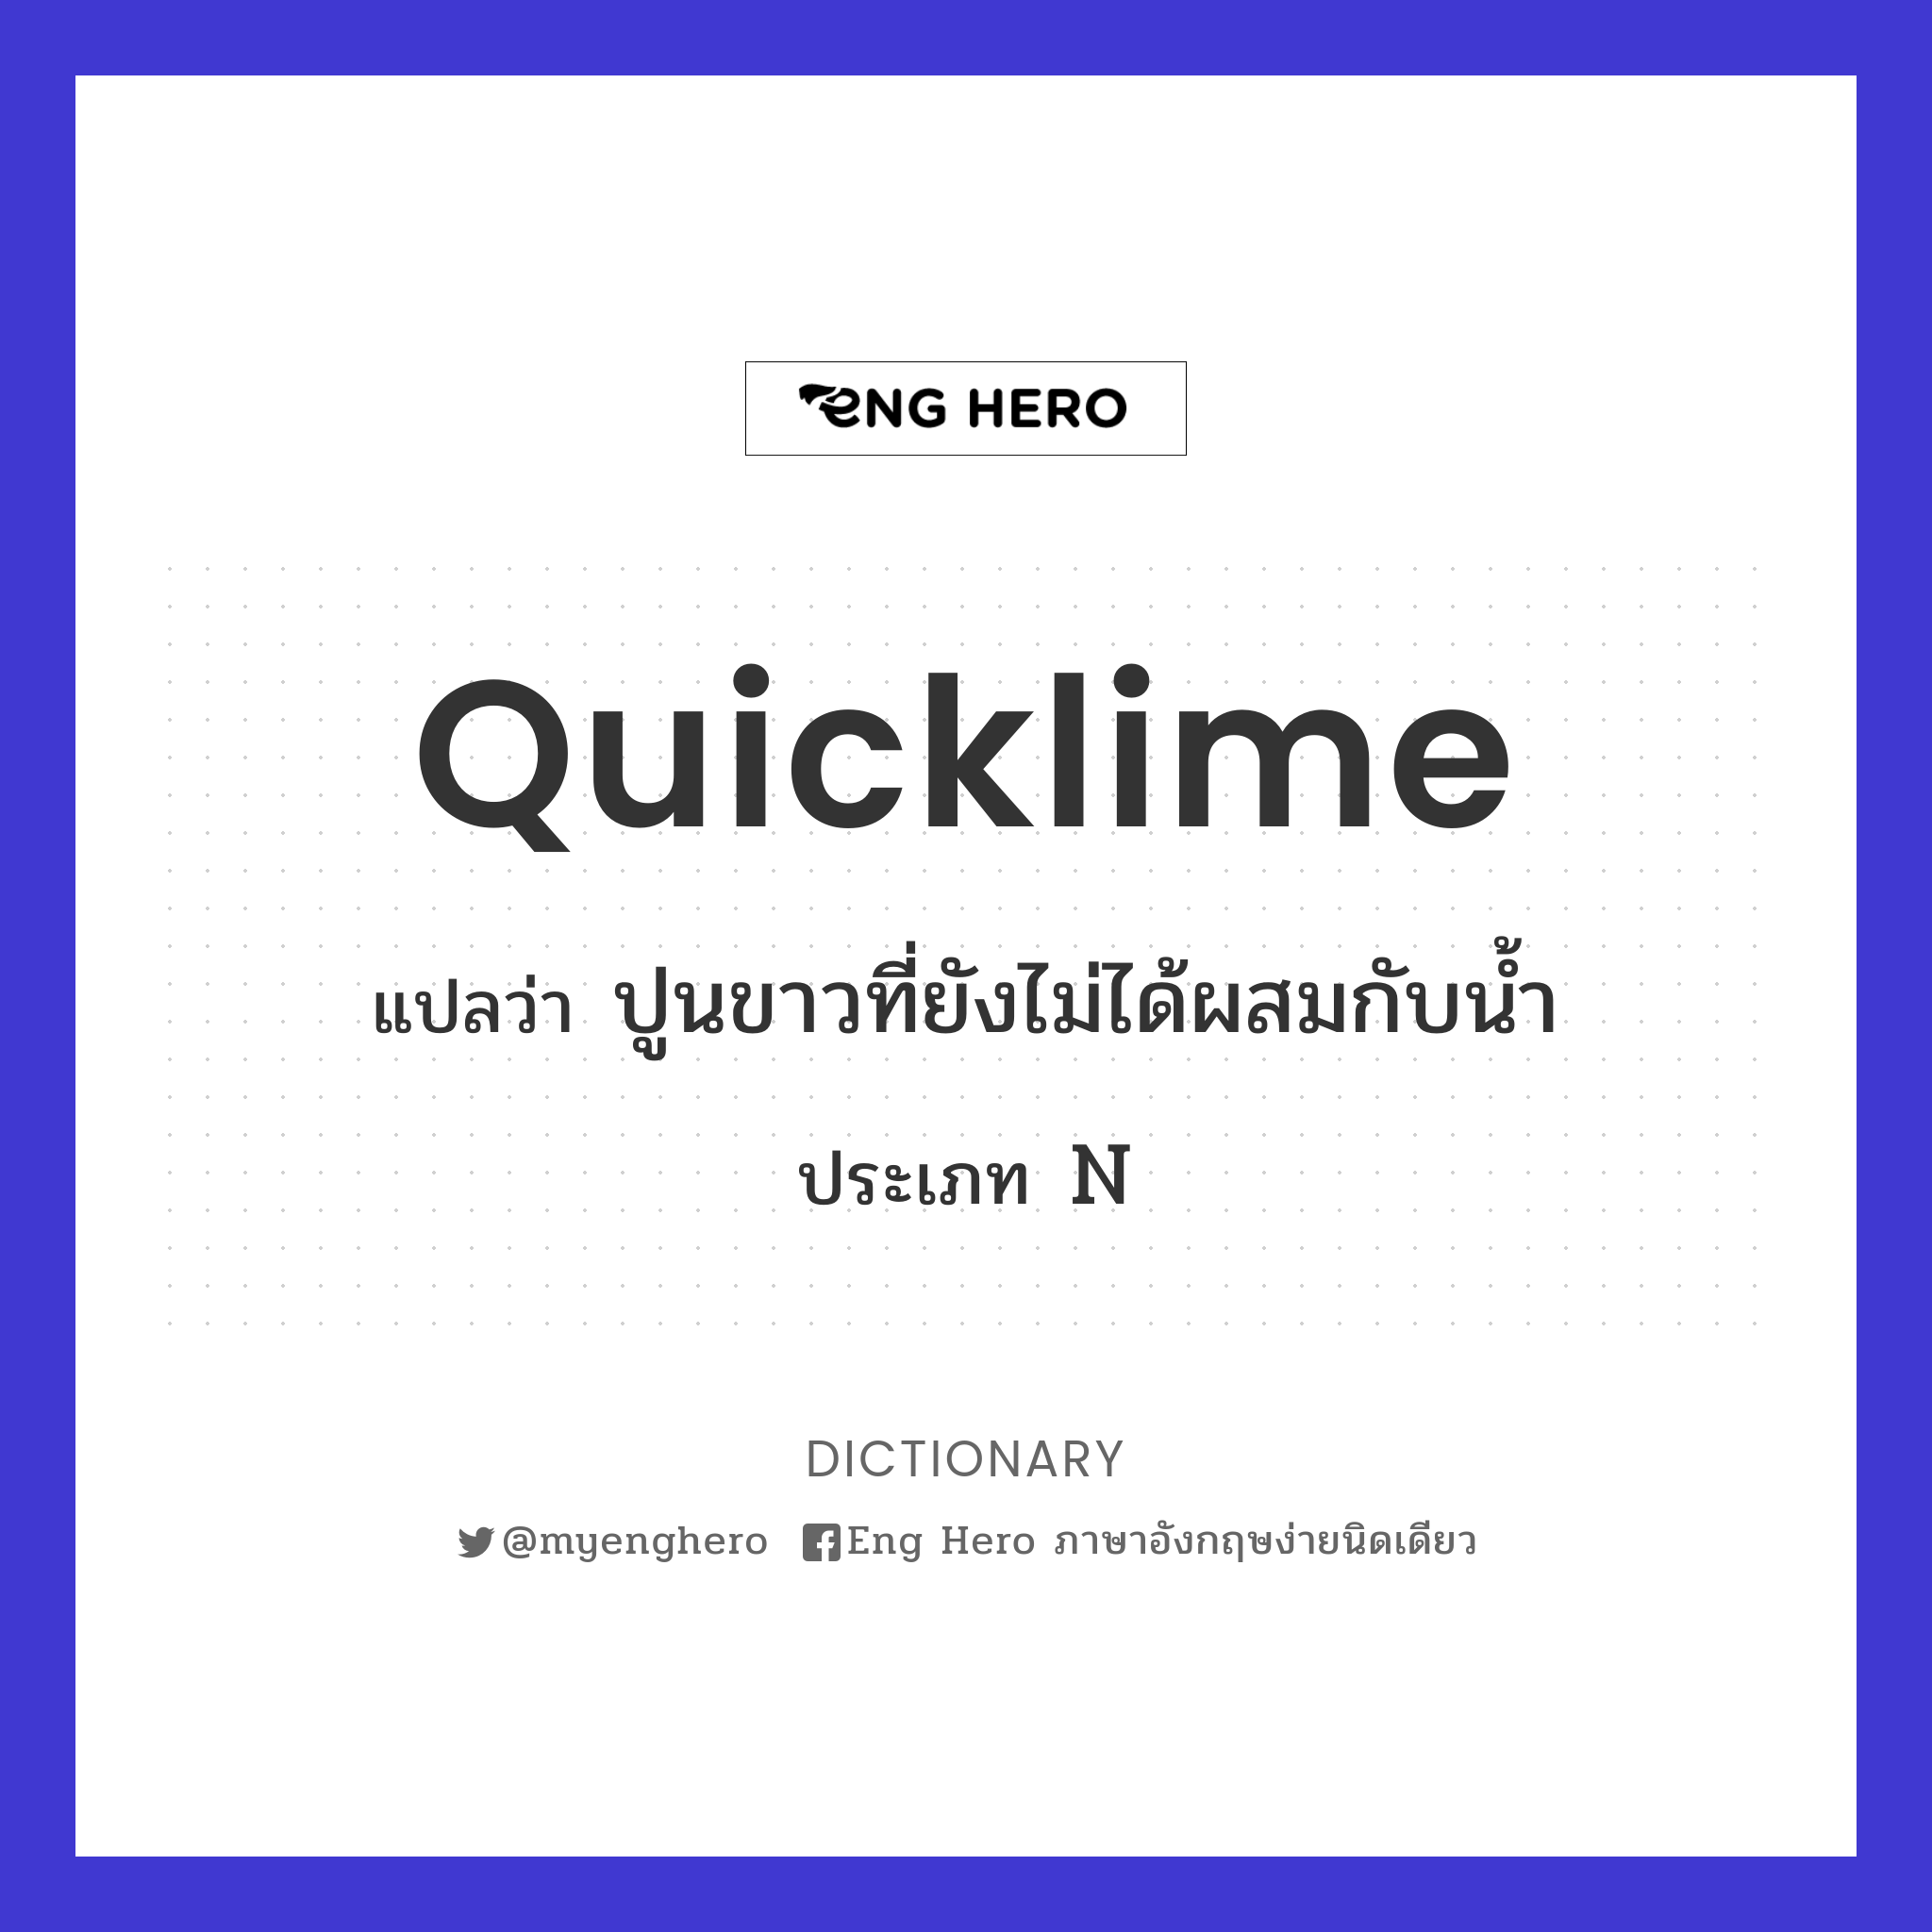 quicklime